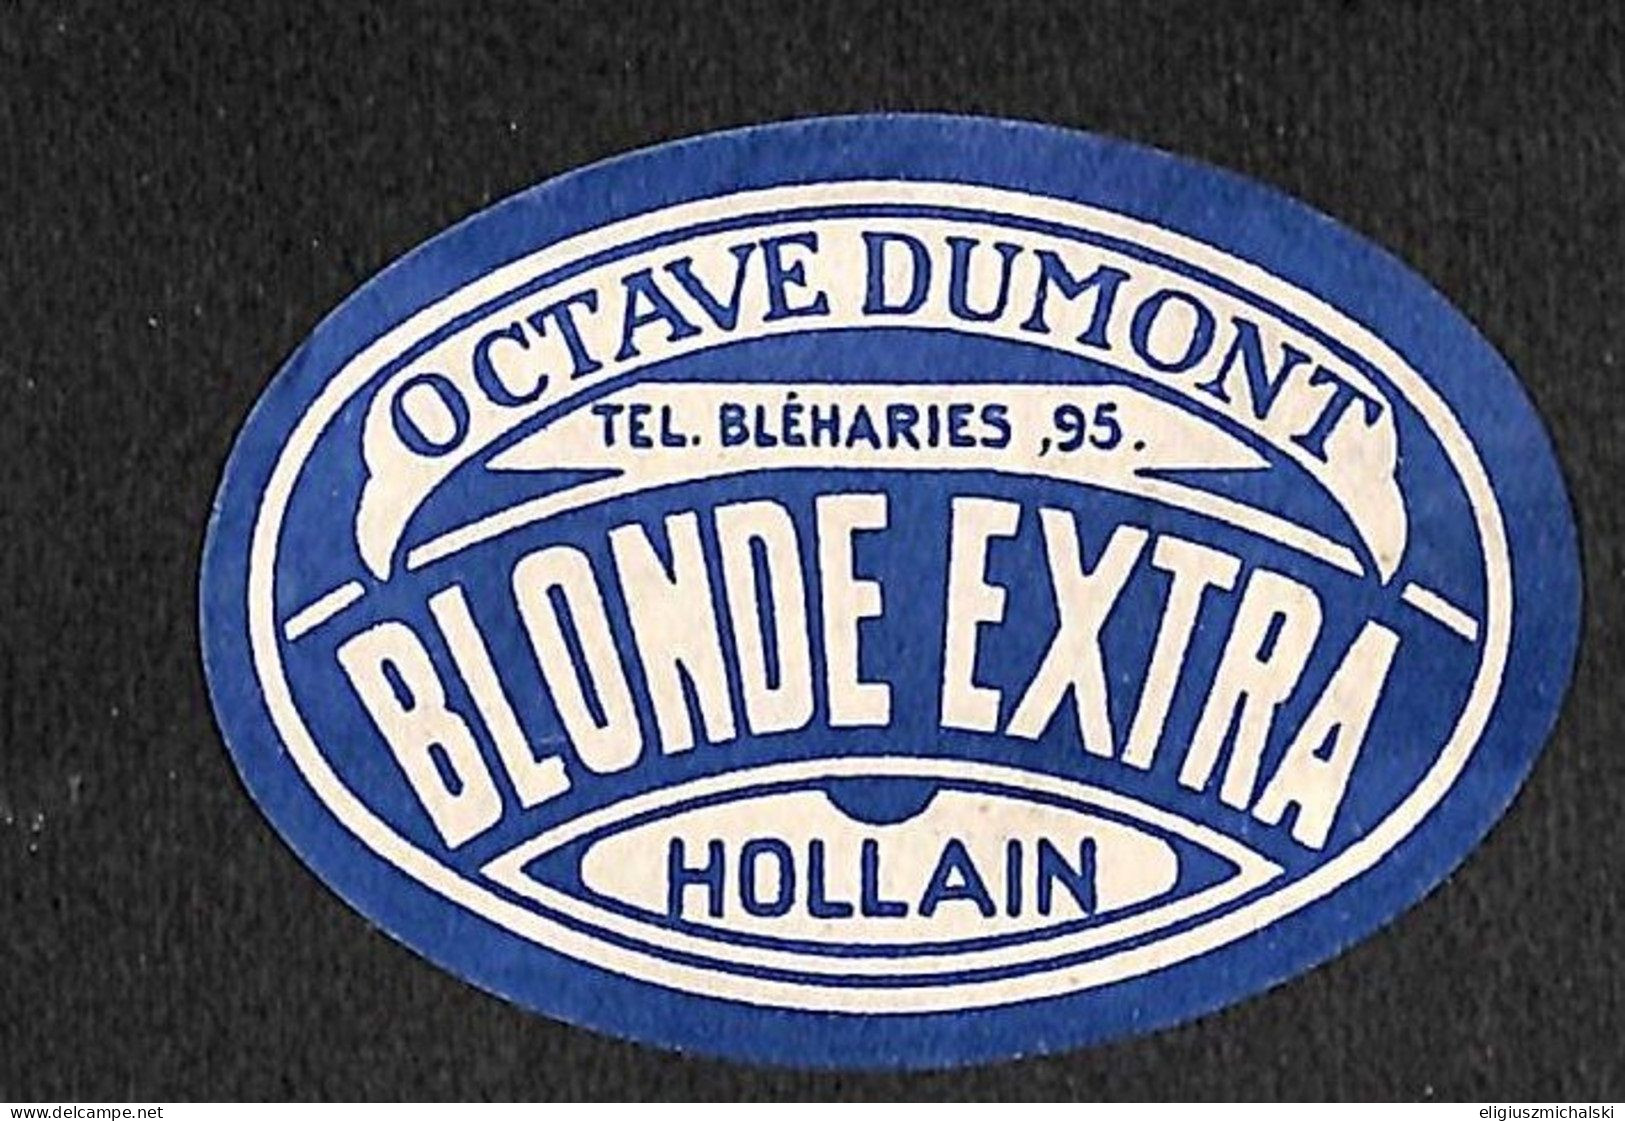 Hollain - Dumont Octave Blonde Extra - Bier